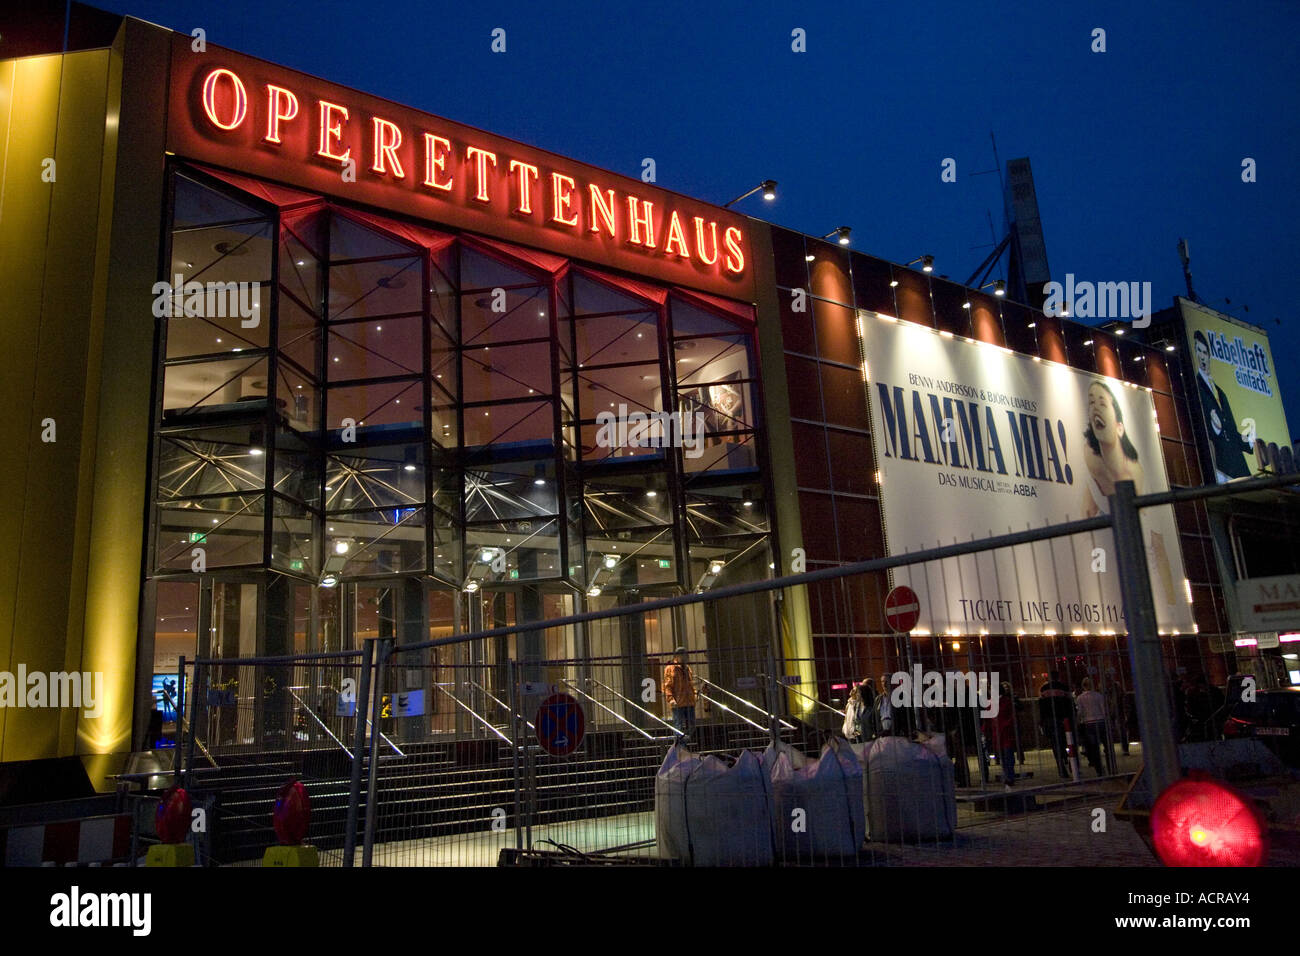 Operettenhaus, St Pauli, Reeperbahn, Hamburg, Germany Stock Photo